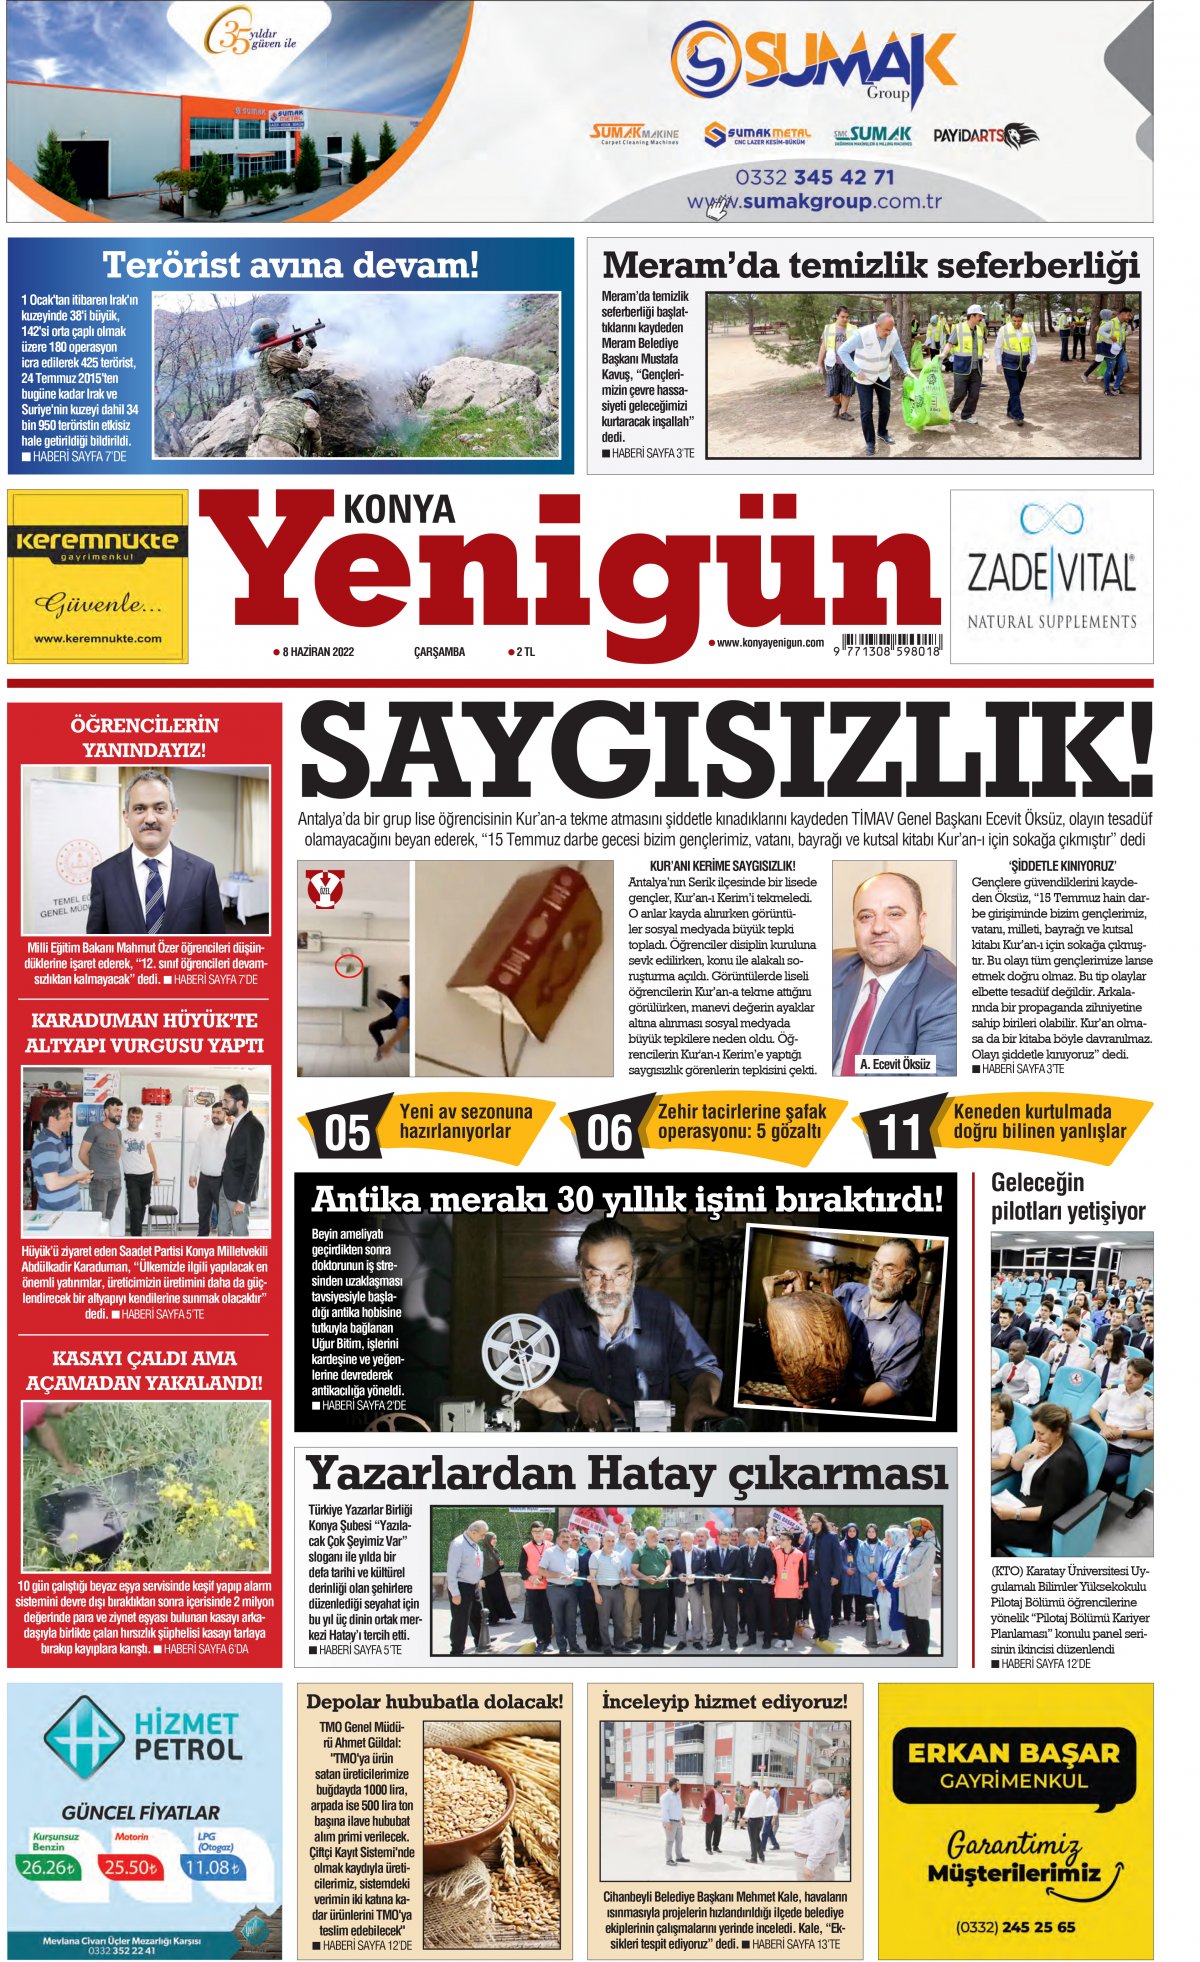 Konya Yenigün Gazetesi - 08.06.2022 Manşeti